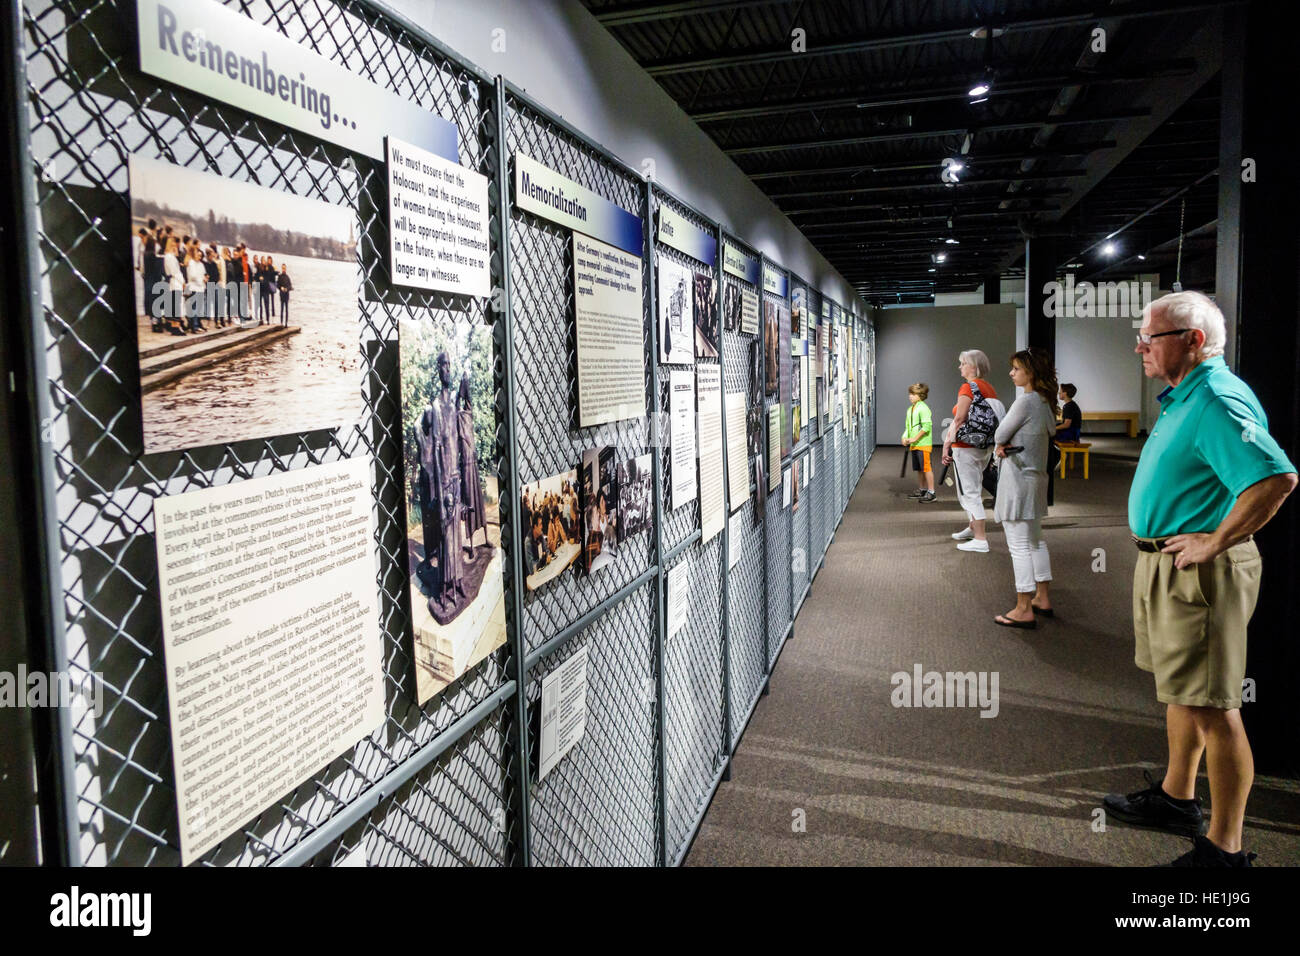 St. Saint Petersburg Florida, Florida Holocaust Museum, innen, Ausstellungsausstellung Sammlung Konzentrationslager Lager, FL161129094 Stockfoto